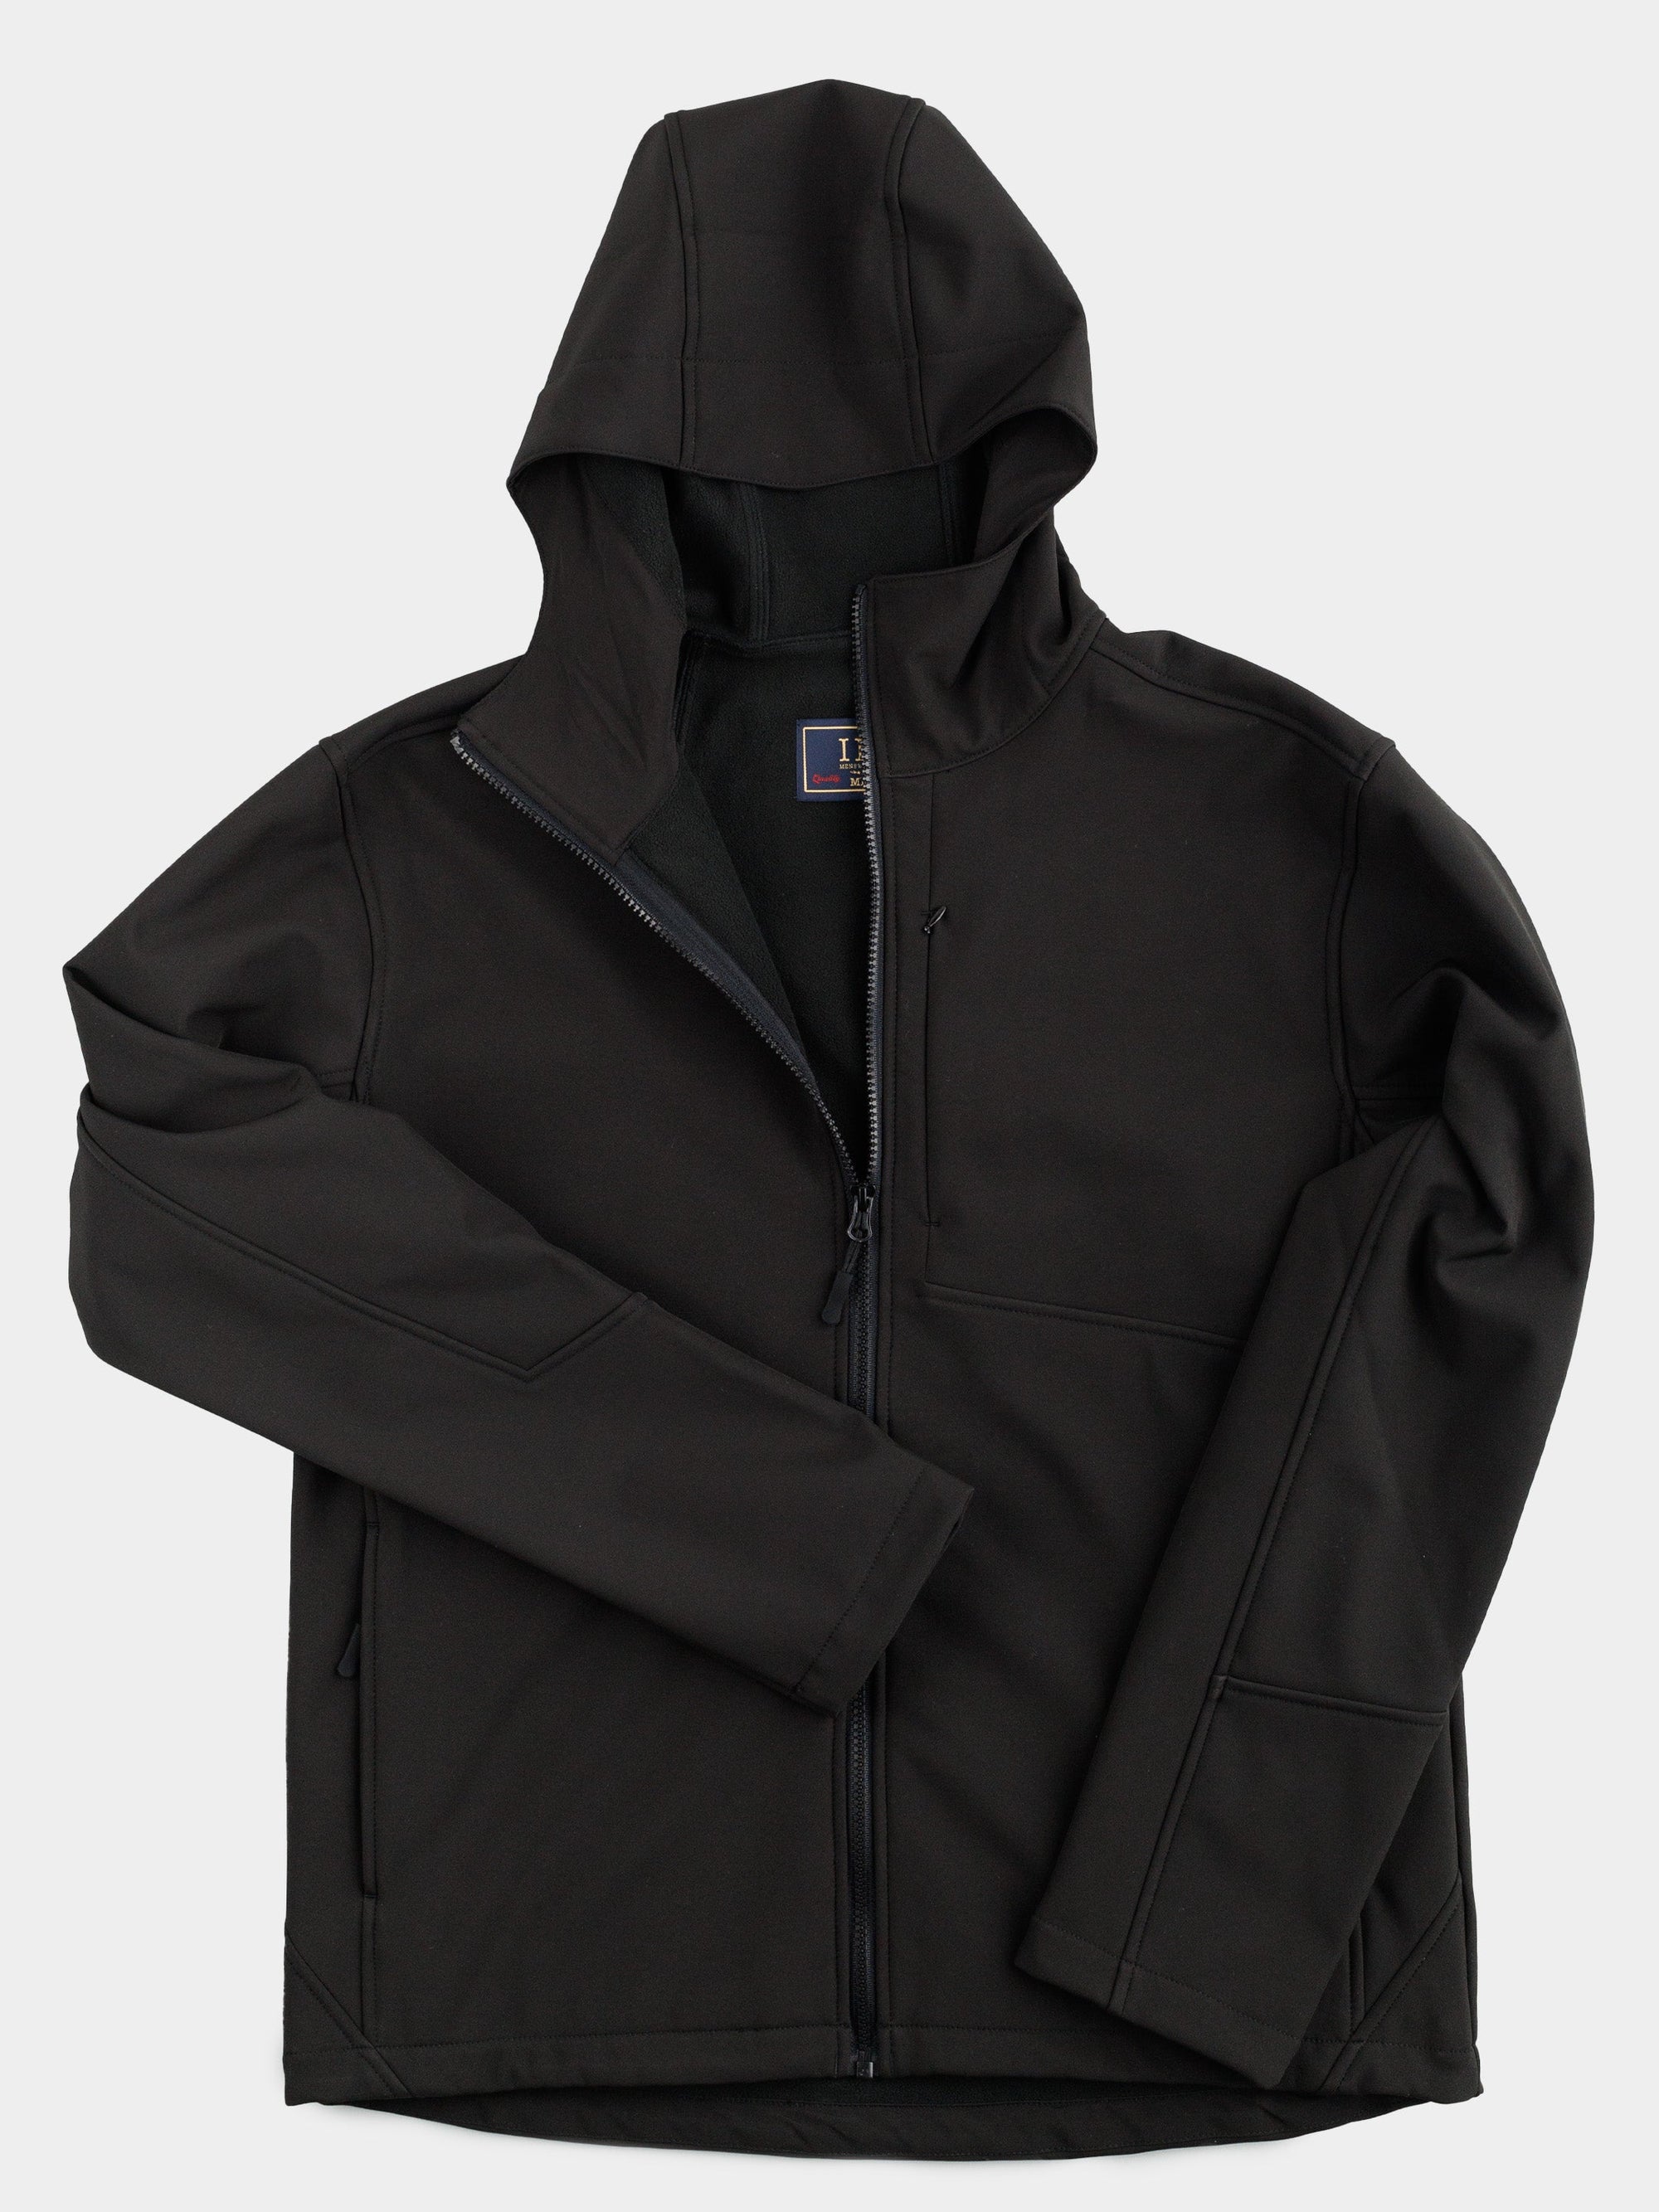 Fairbanks Soft Shell Hooded Jacket